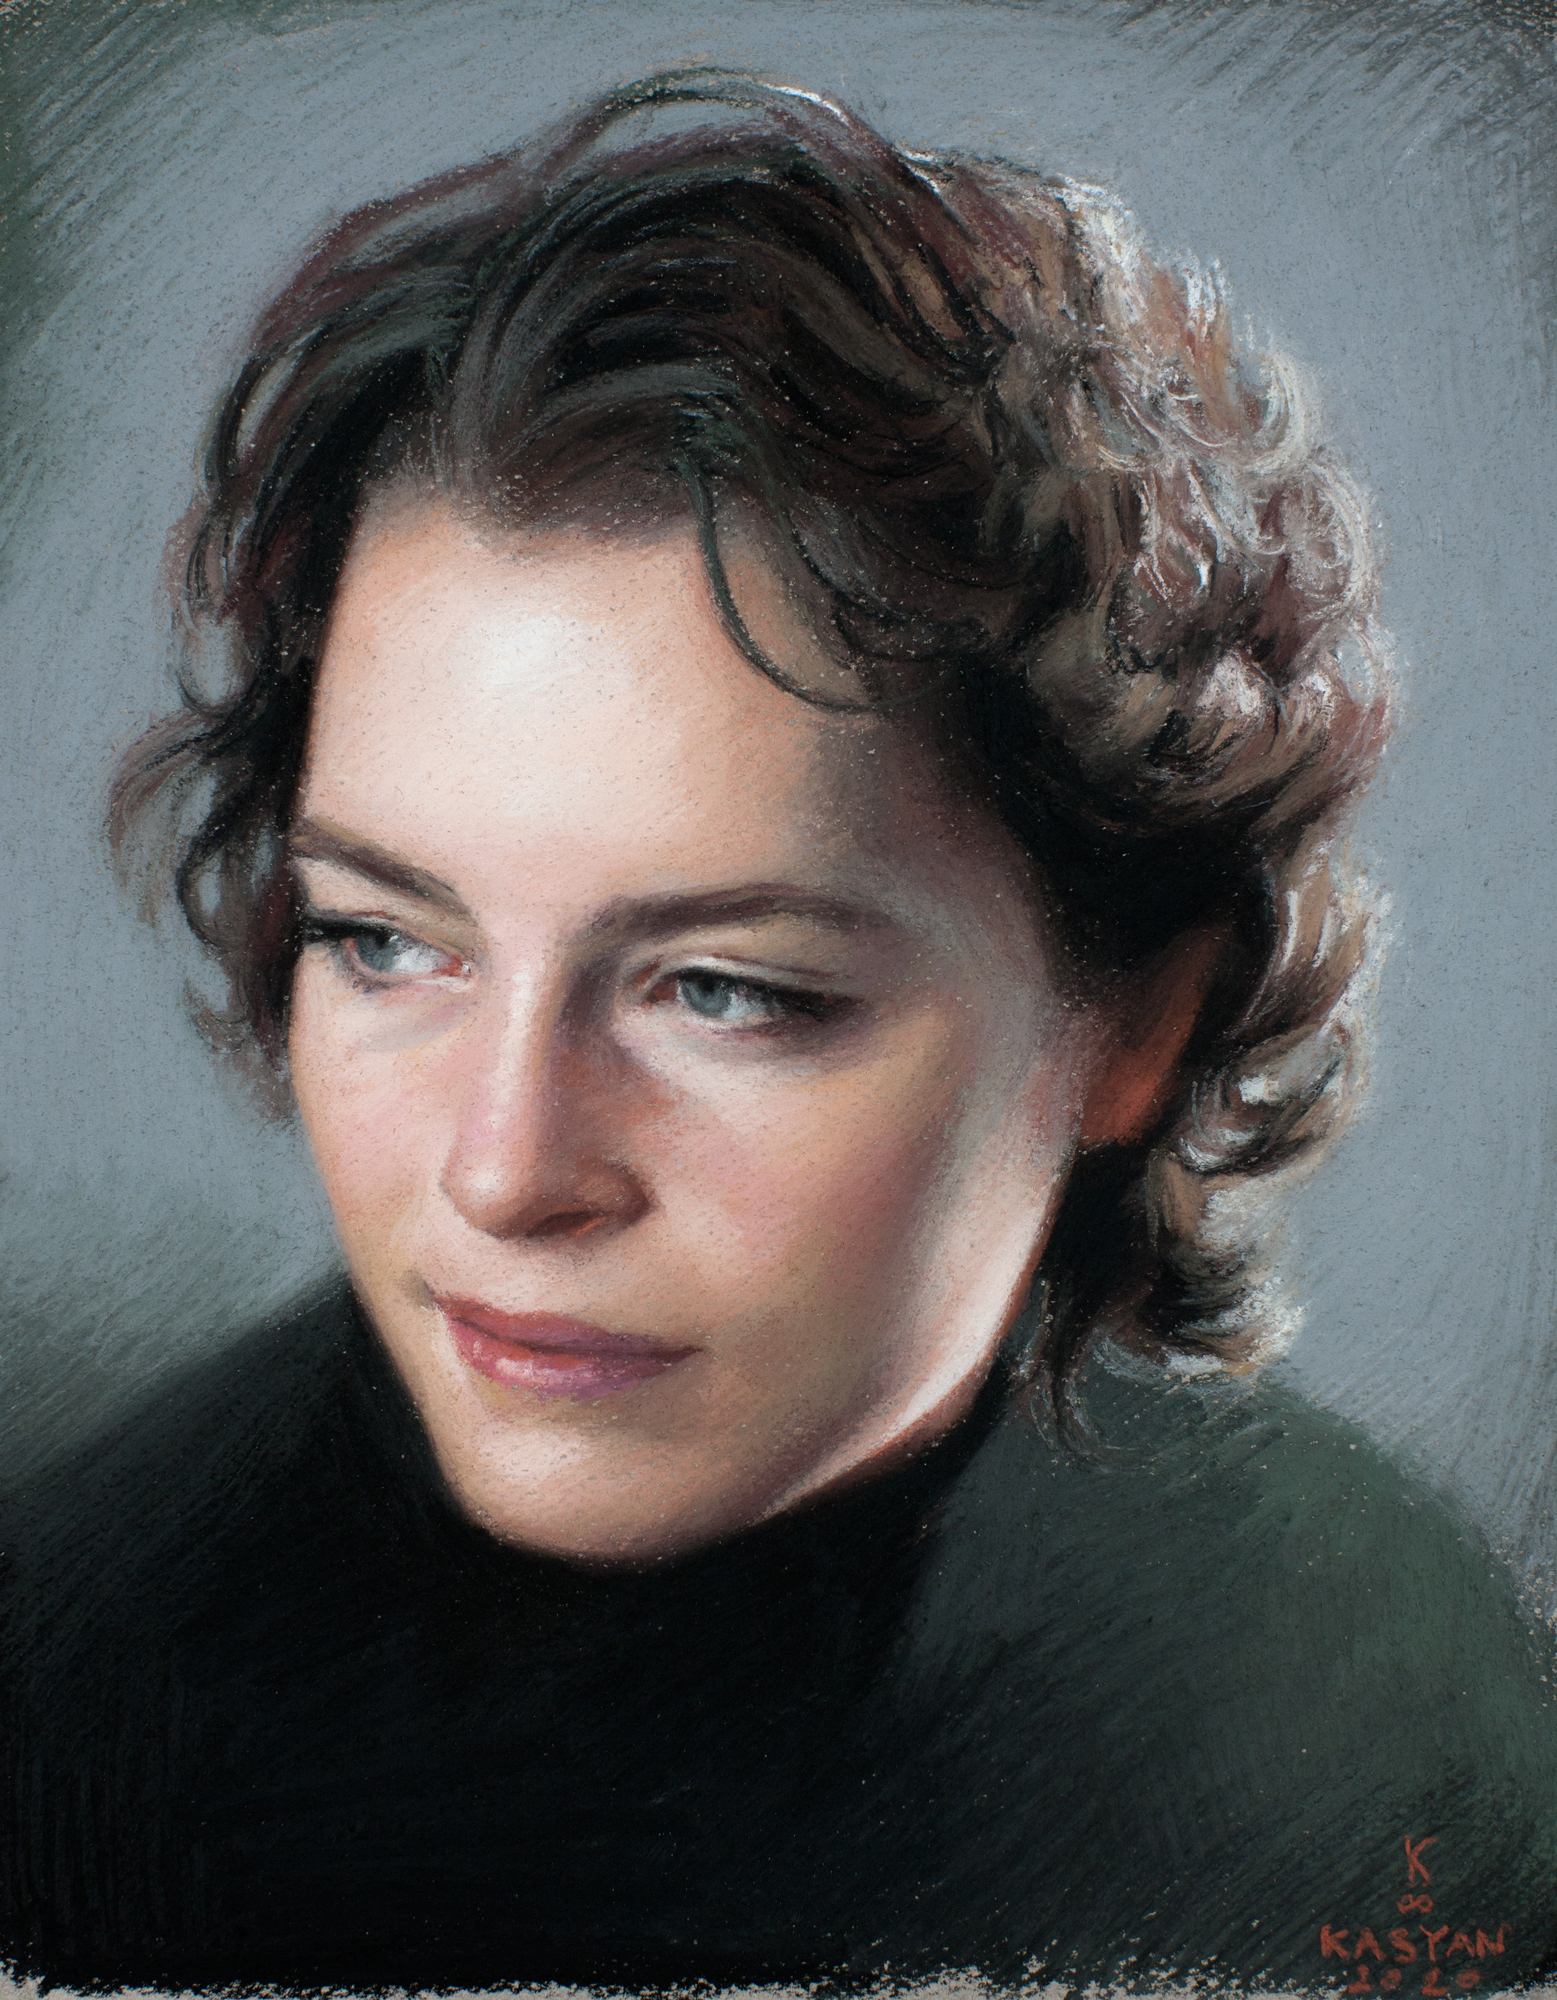 Realism portrait of a woman